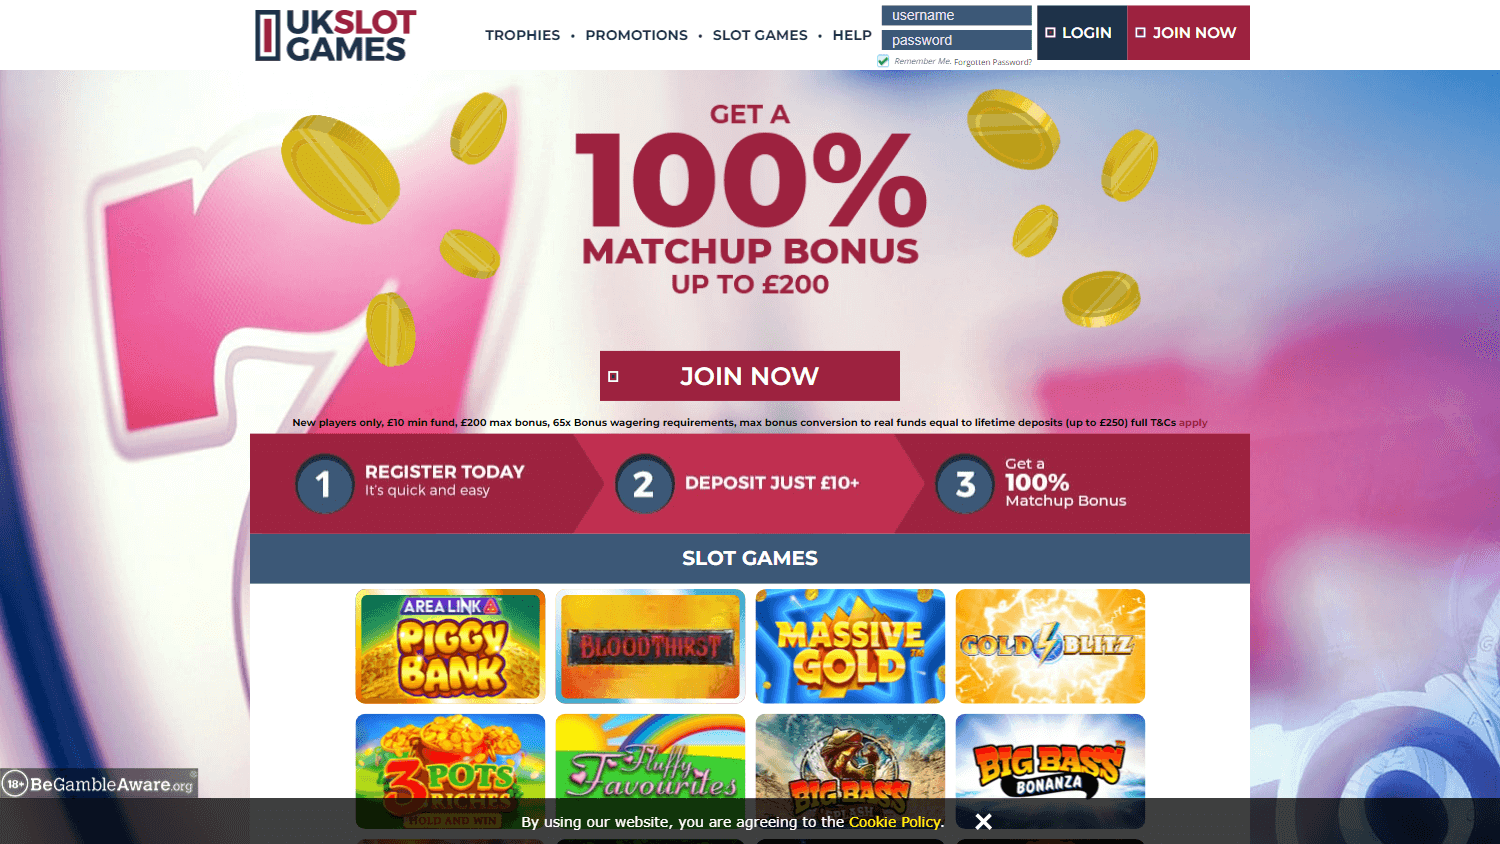 uk_slot_games_casino_homepage_desktop